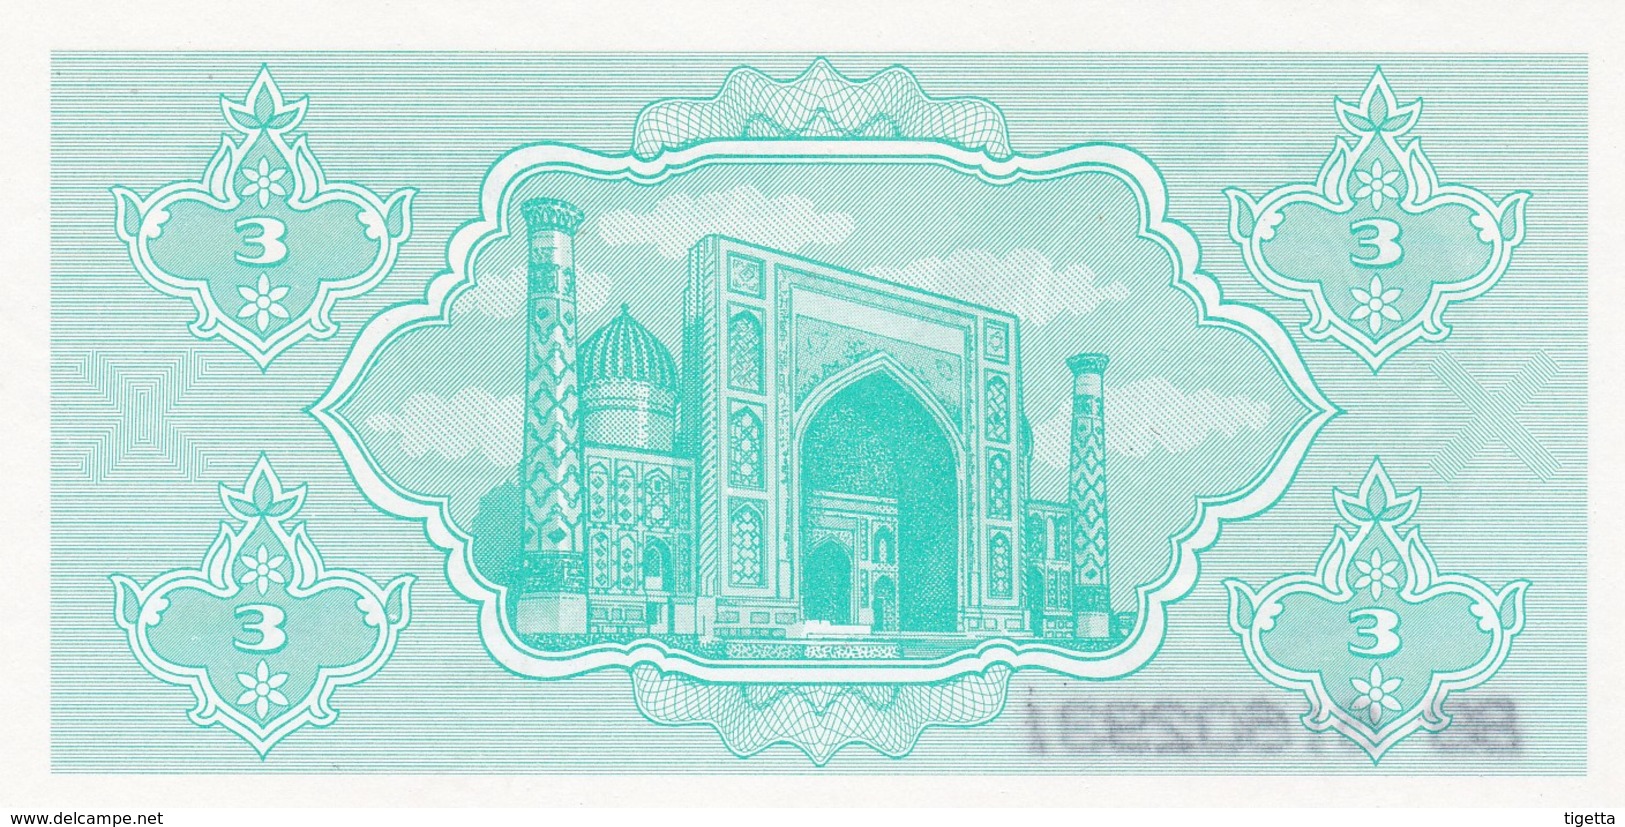 UZBEKISTAN  3 SUM  1992  FDS - Uzbekistan